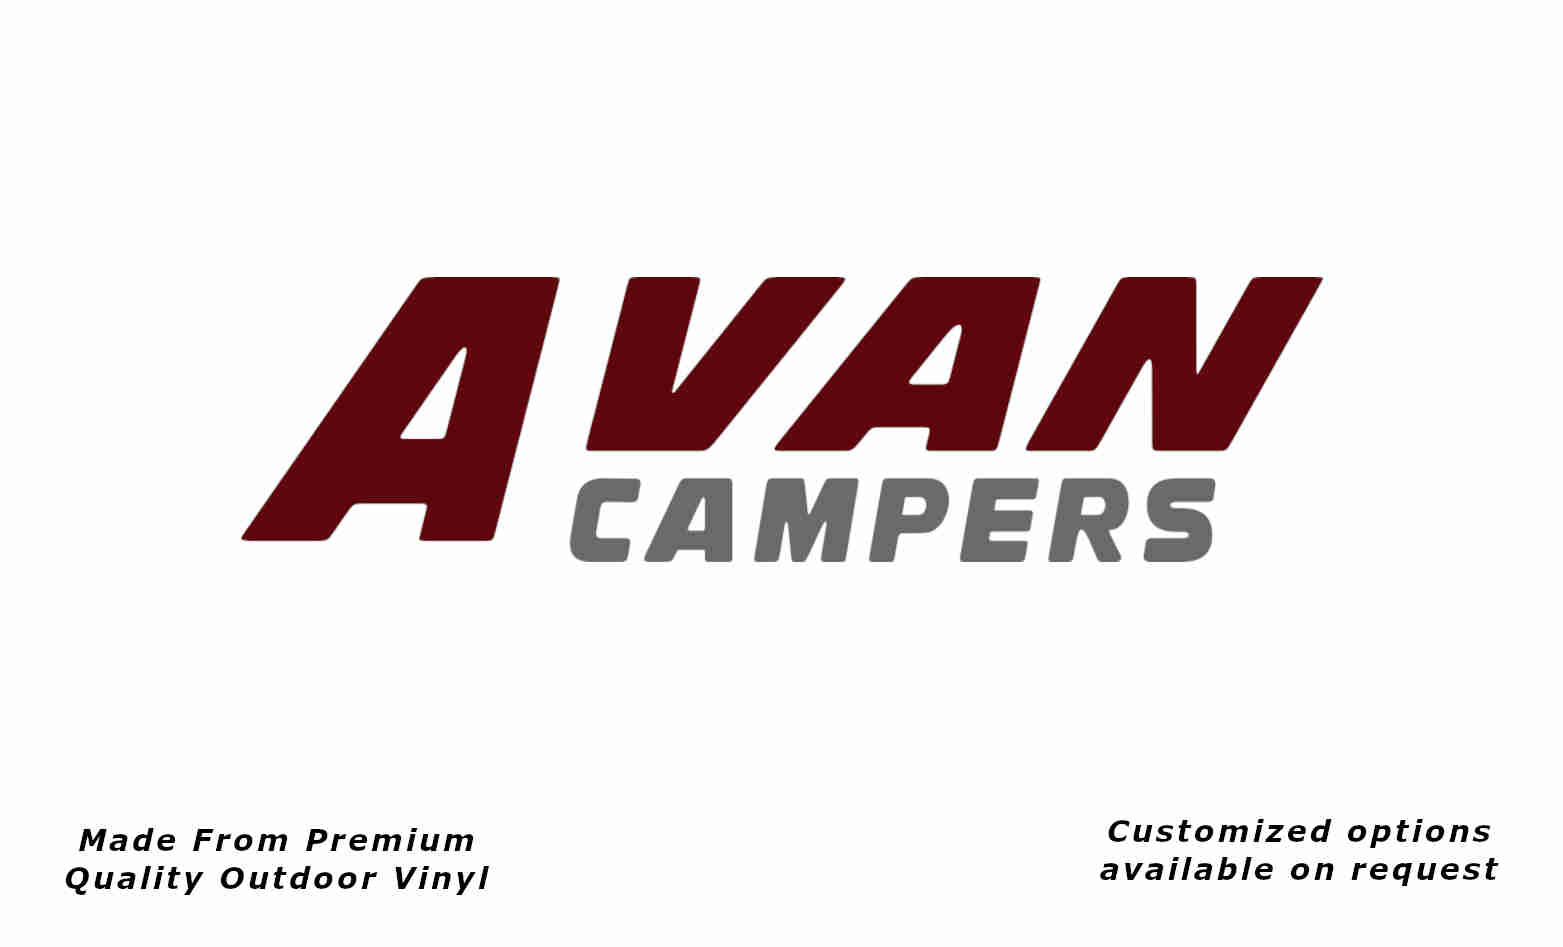 Avan campers caravan replacement vinyl decal sticker in purple red and silver grey.